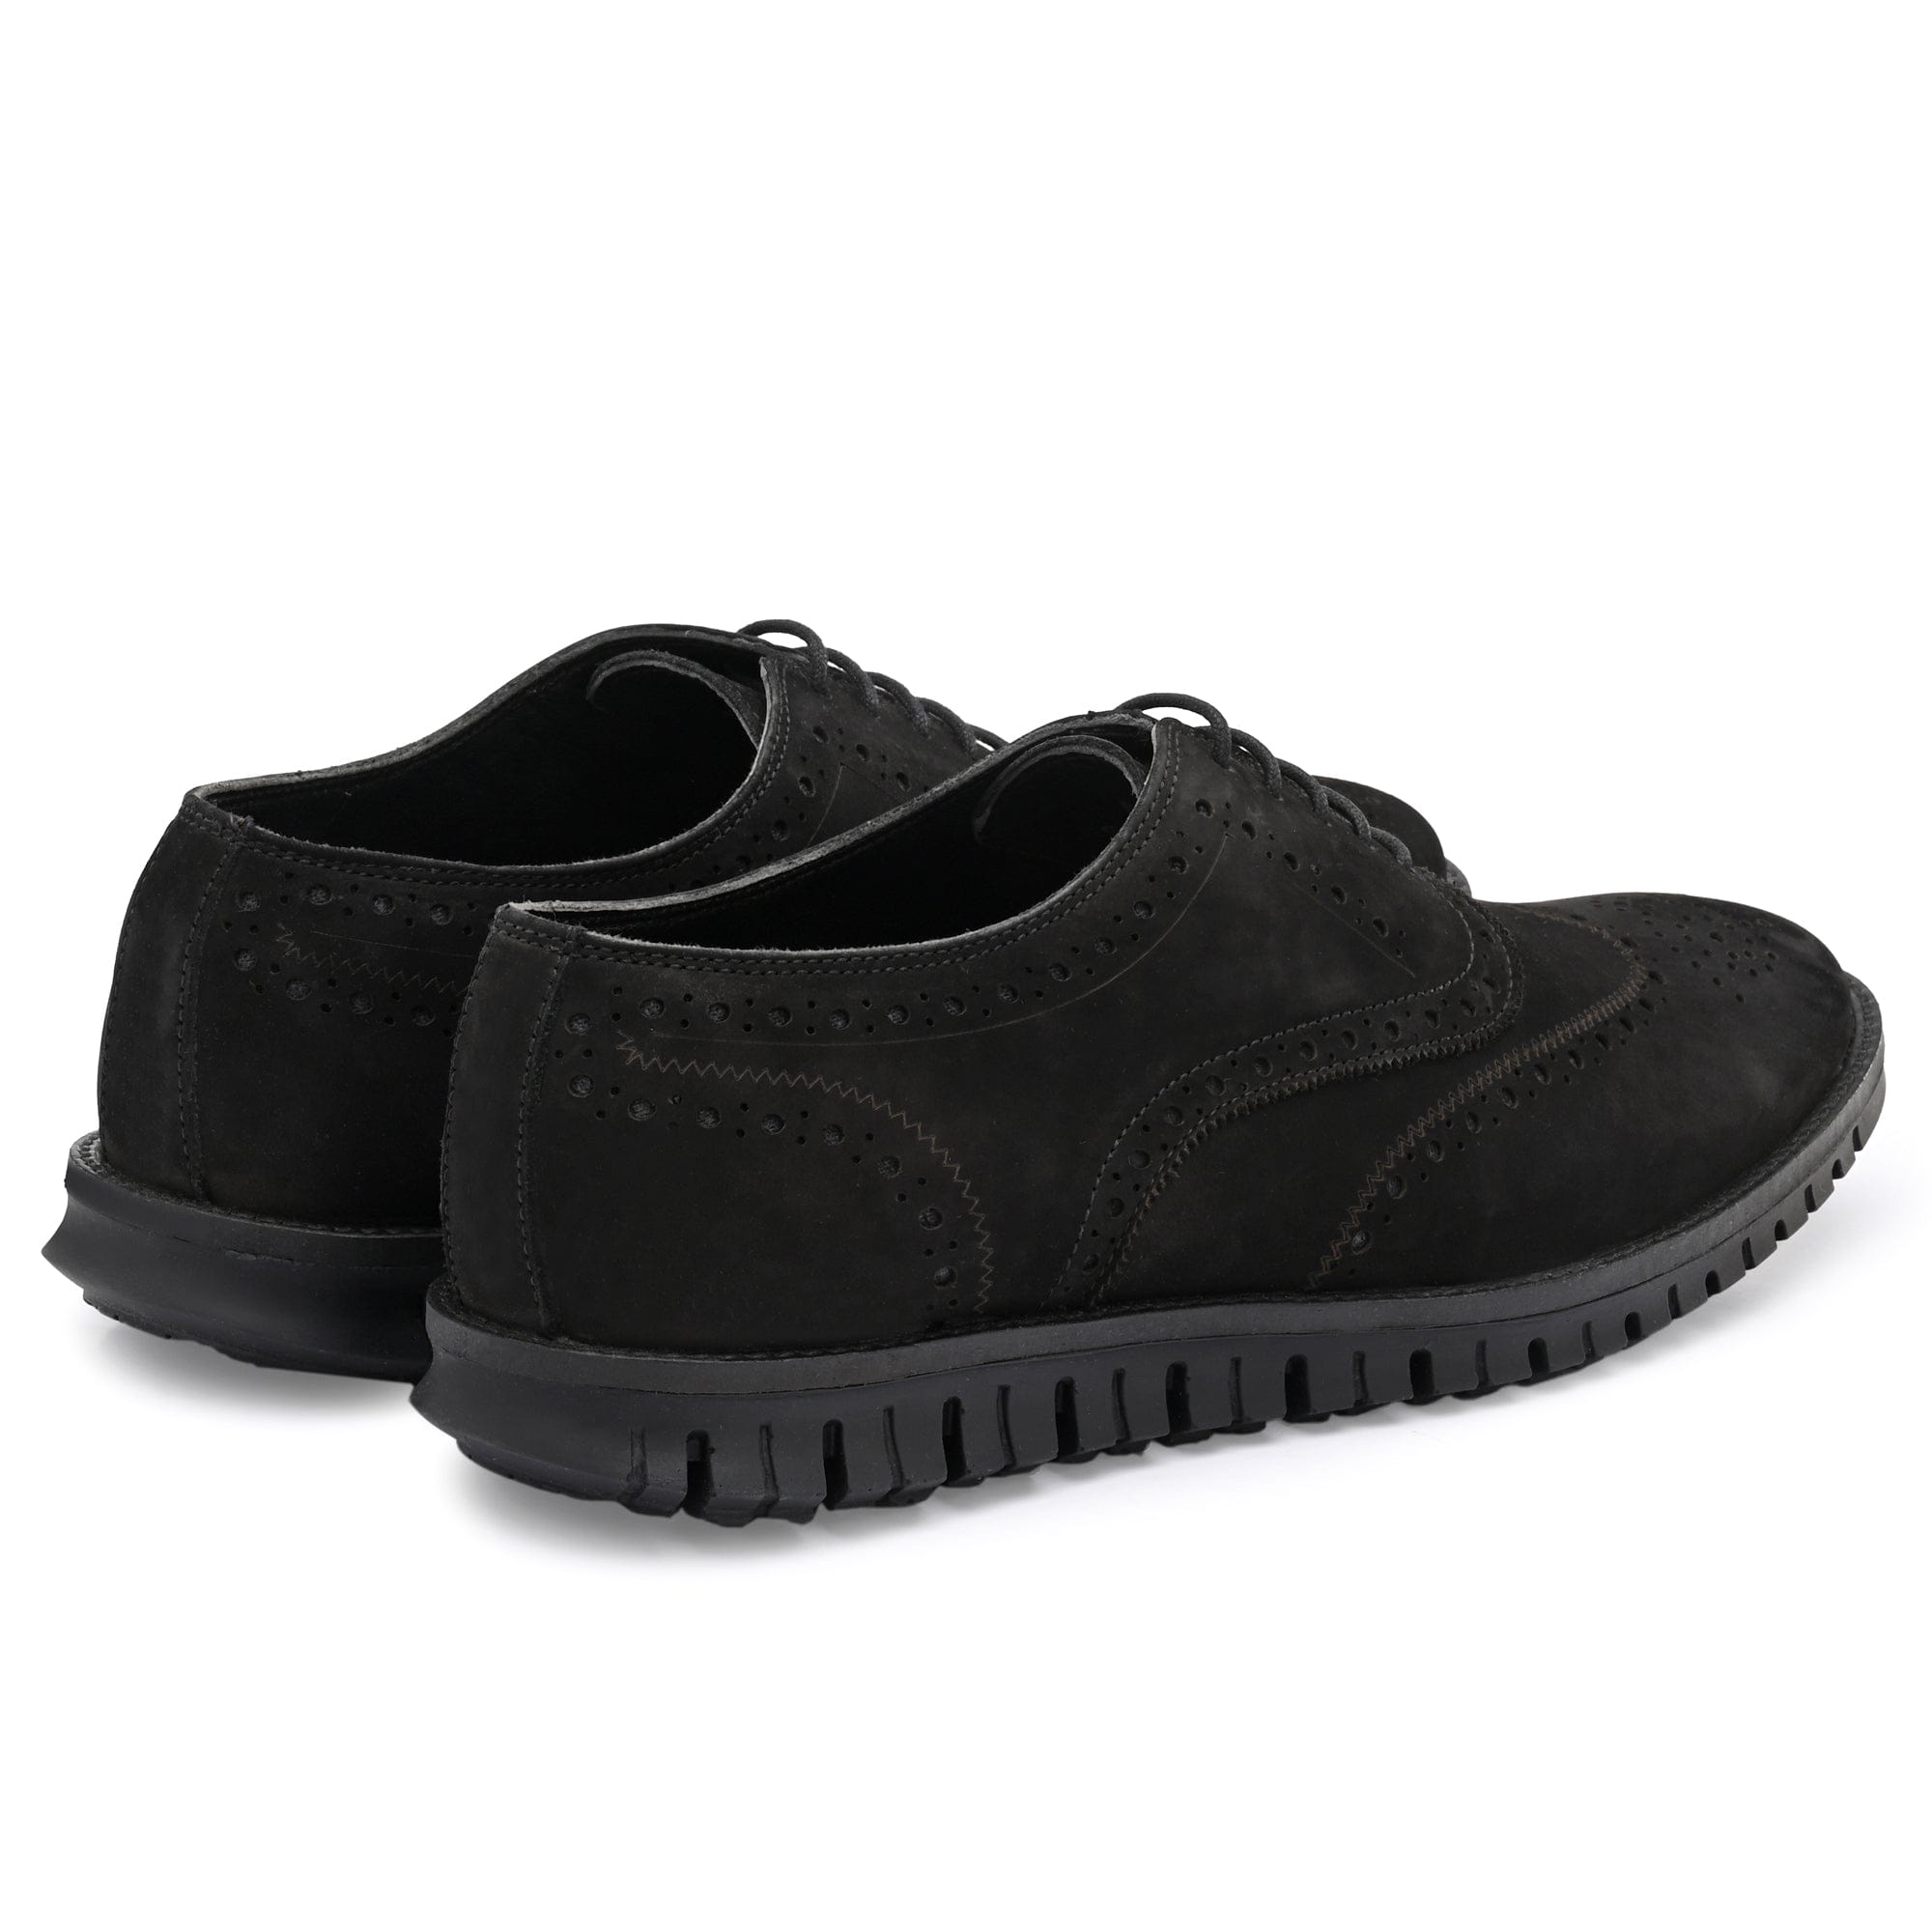 Legwork Brogue Black Italian Nubuck Leather Shoe